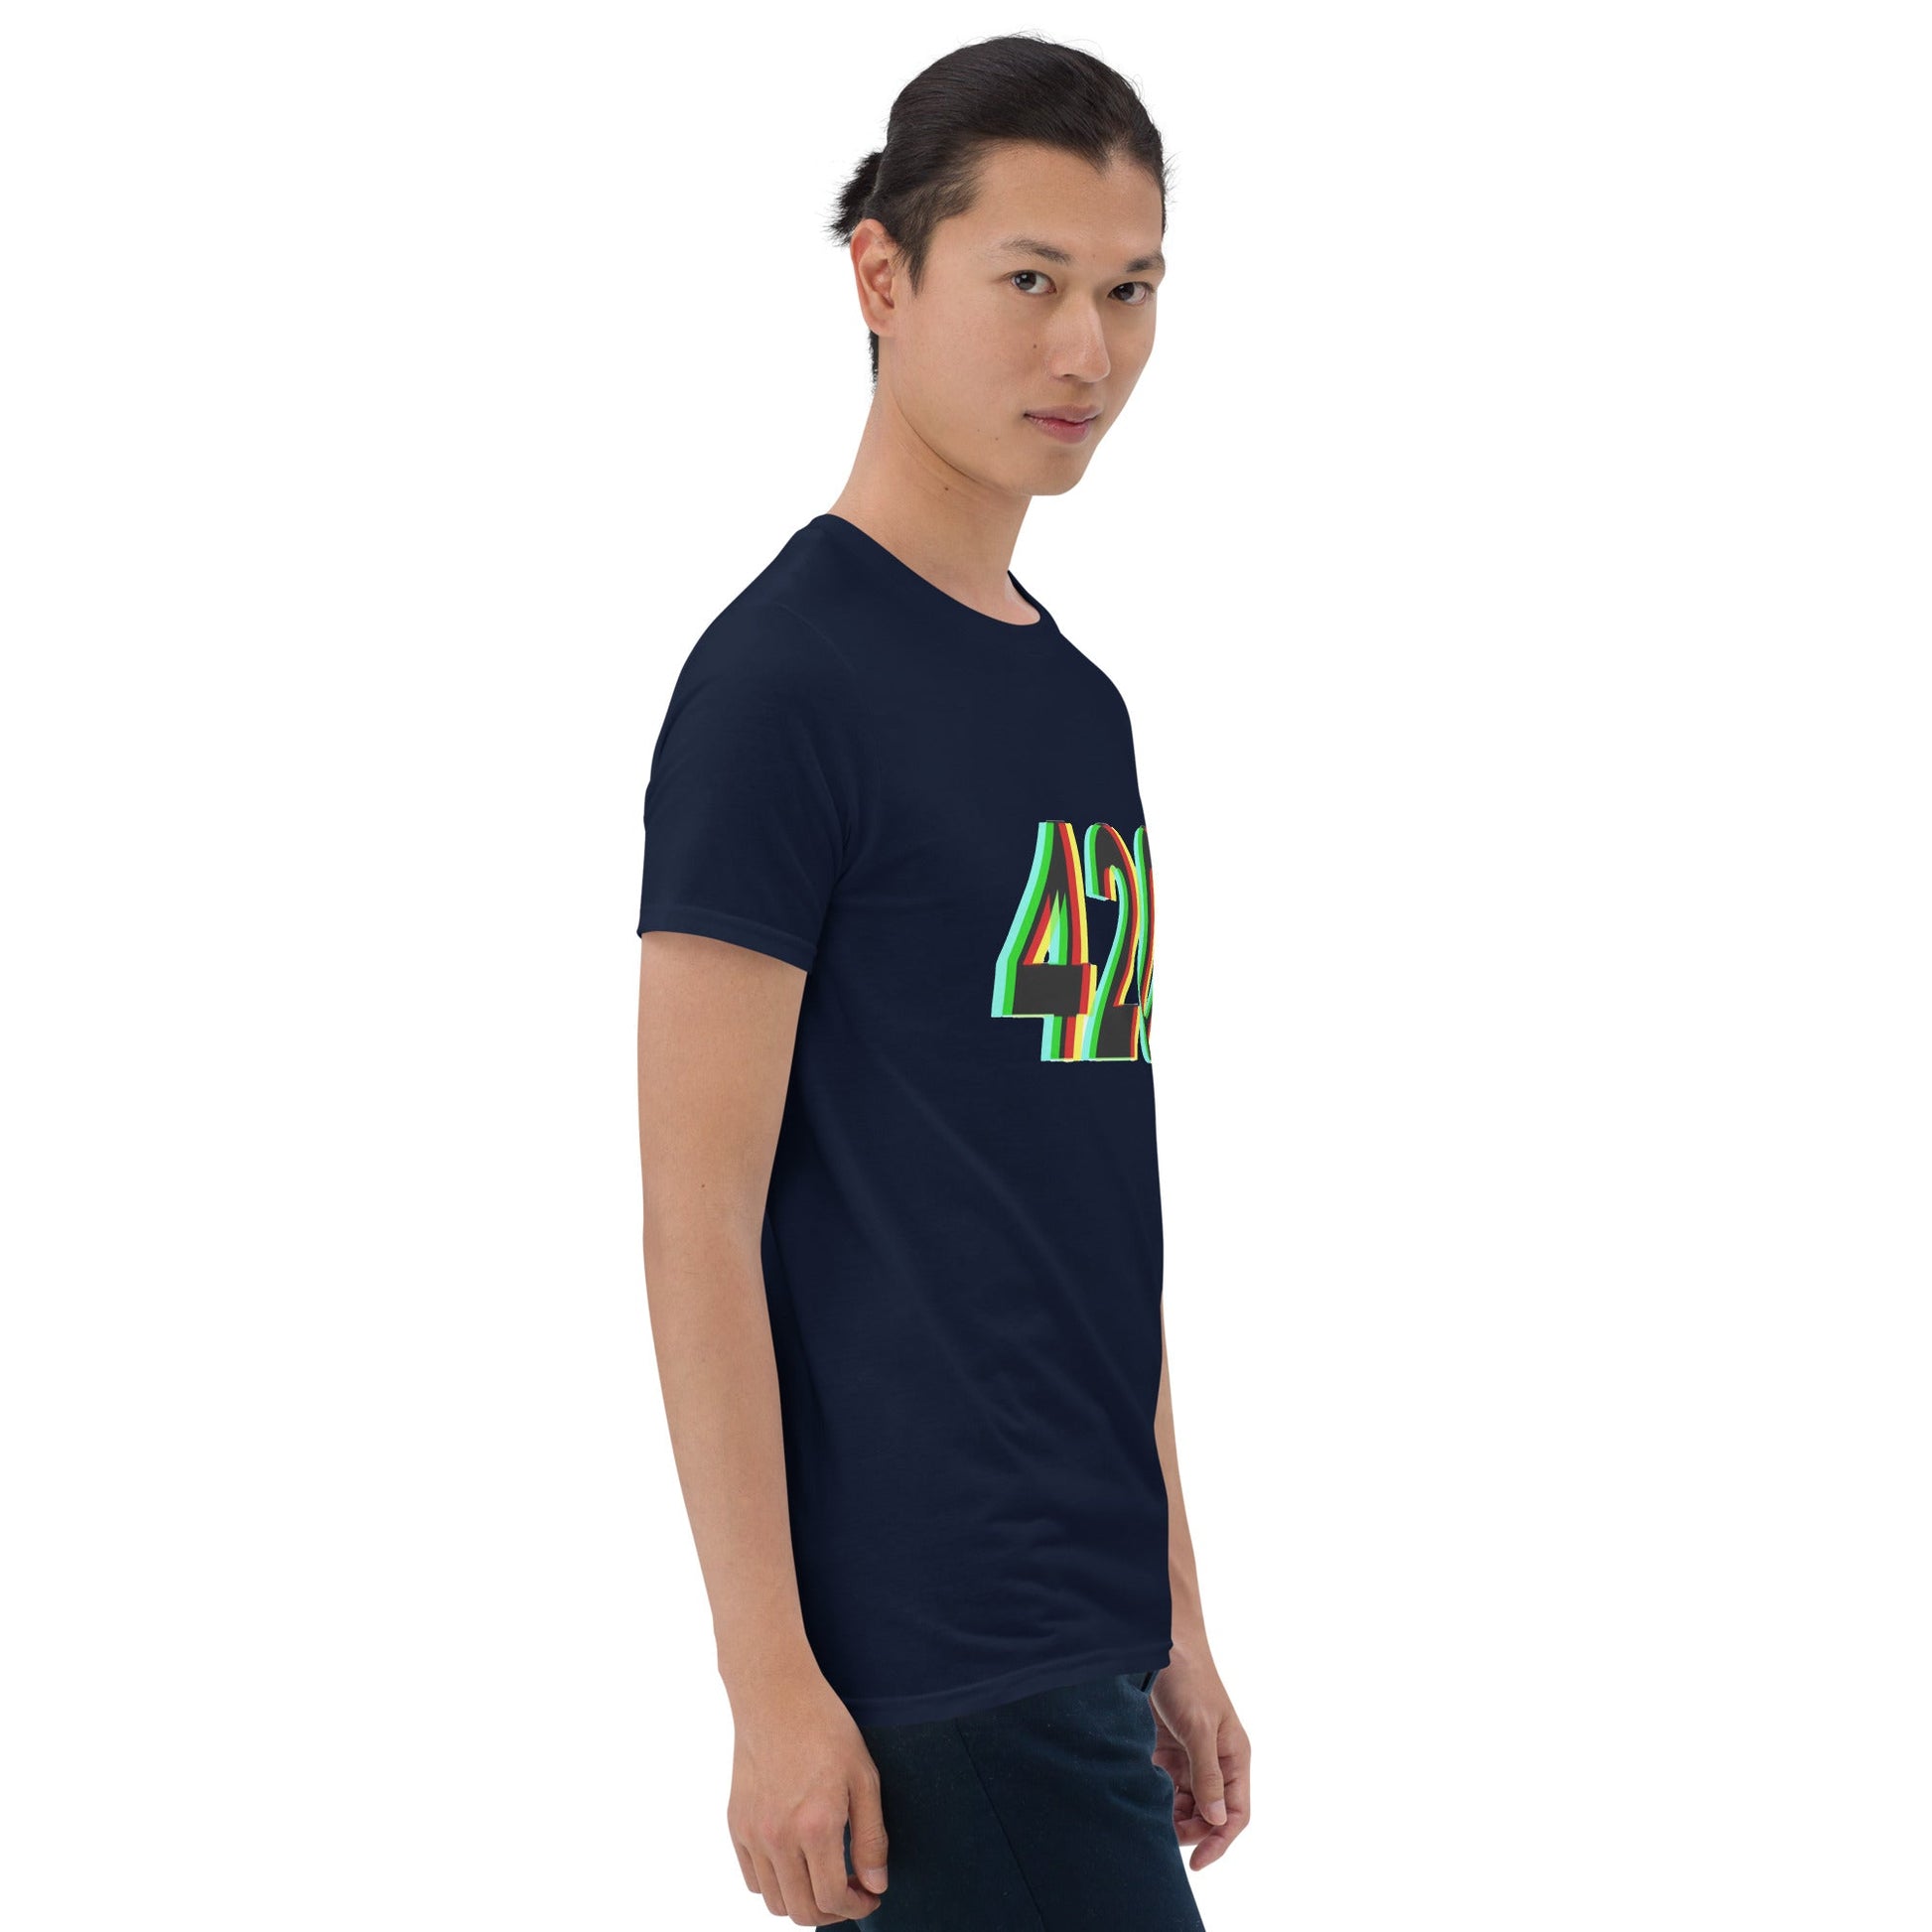 Psychedelic 420 Short-Sleeve Unisex Weed T-Shirt - Lizard Vigilante